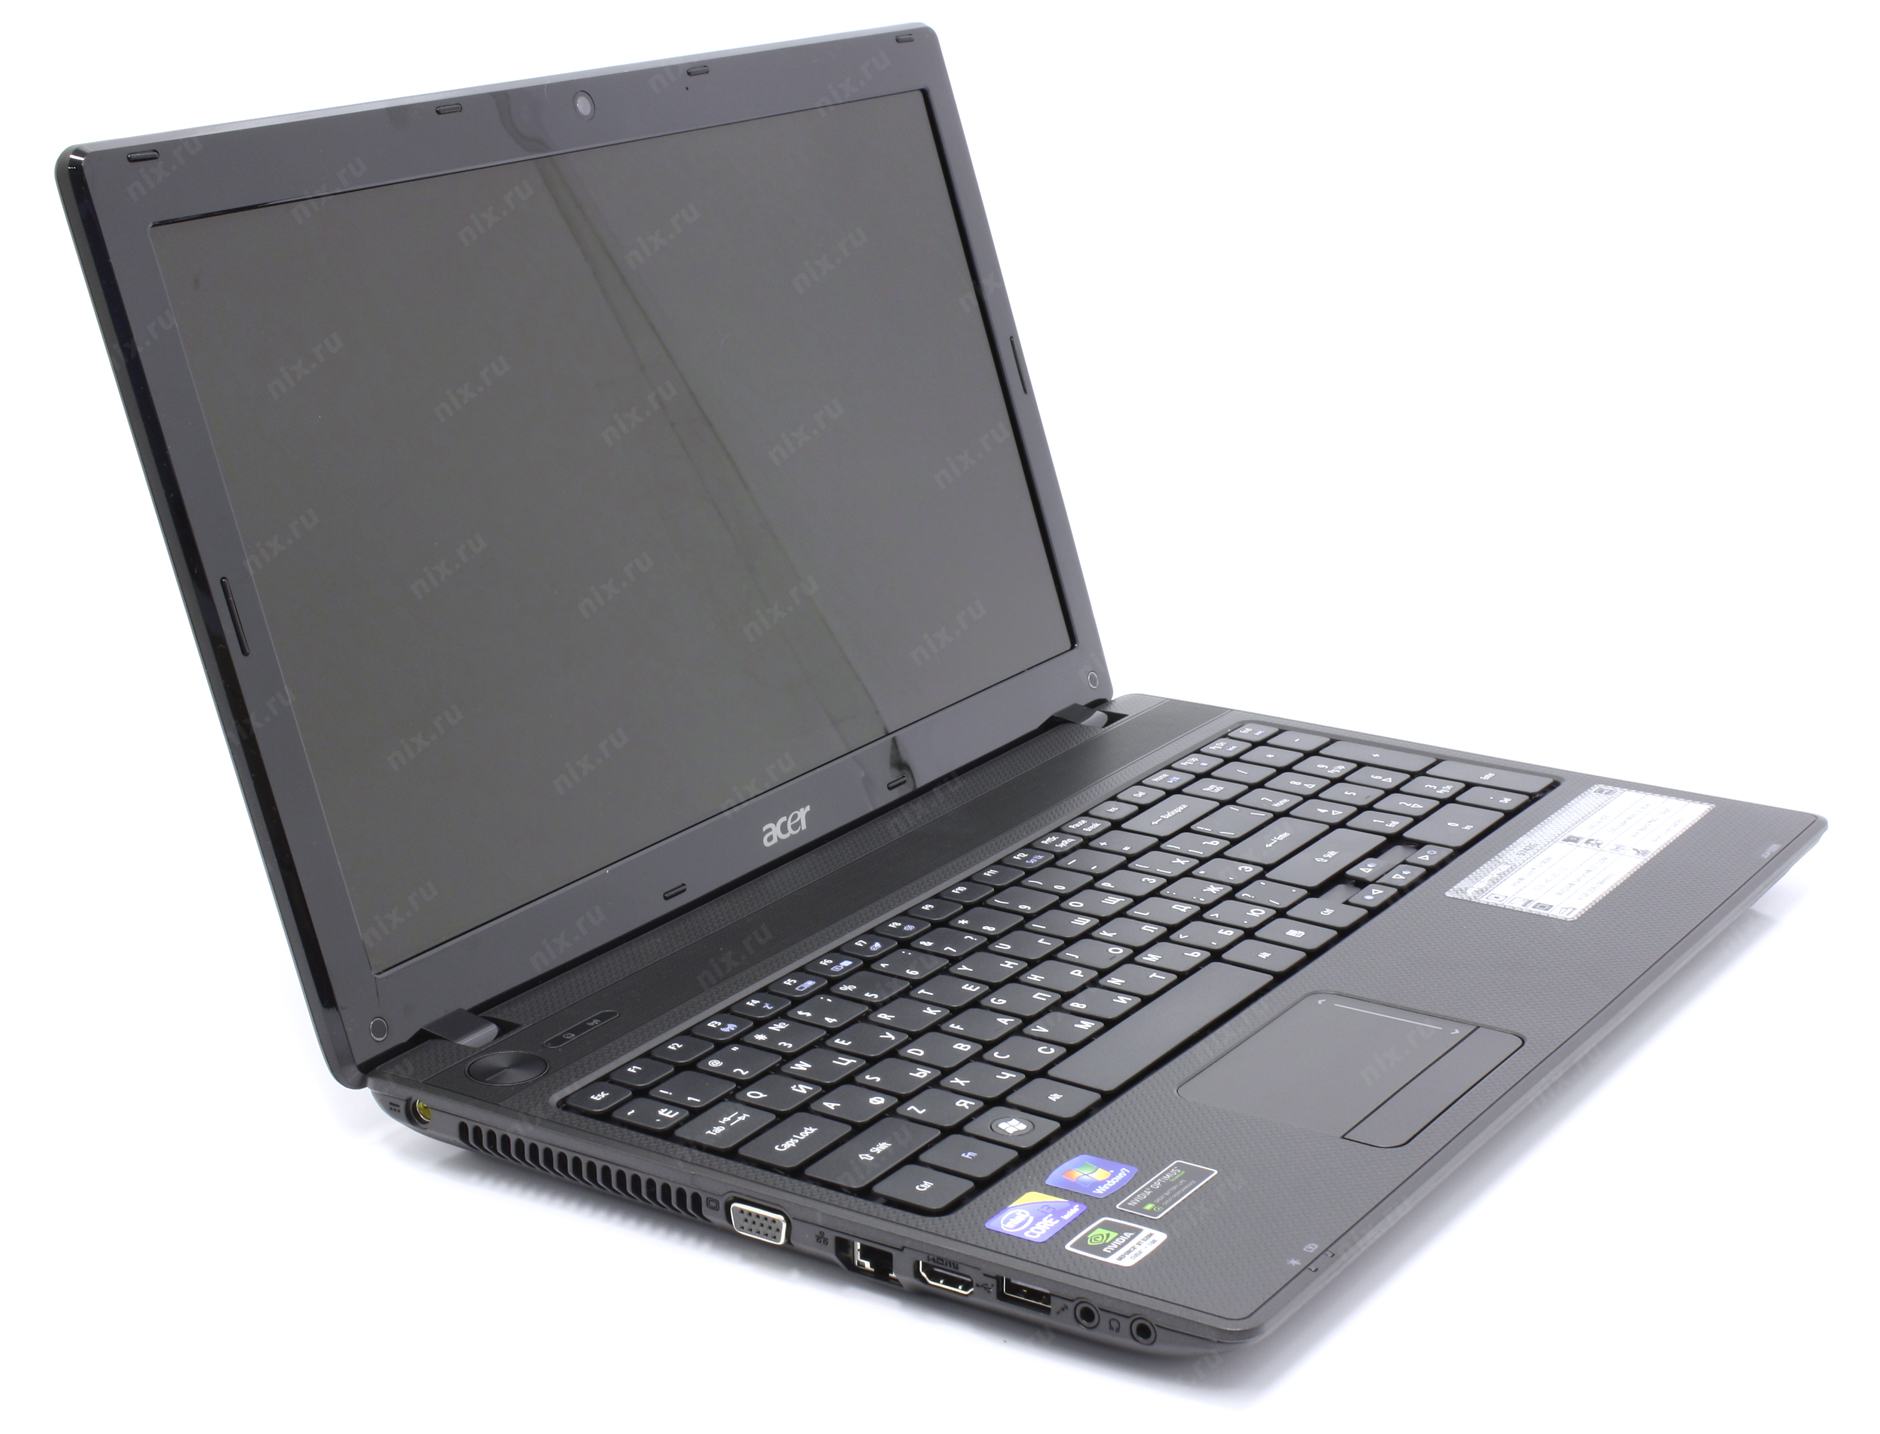 Ноутбук Acer Aspire 5742g 374g50mnkk Цена